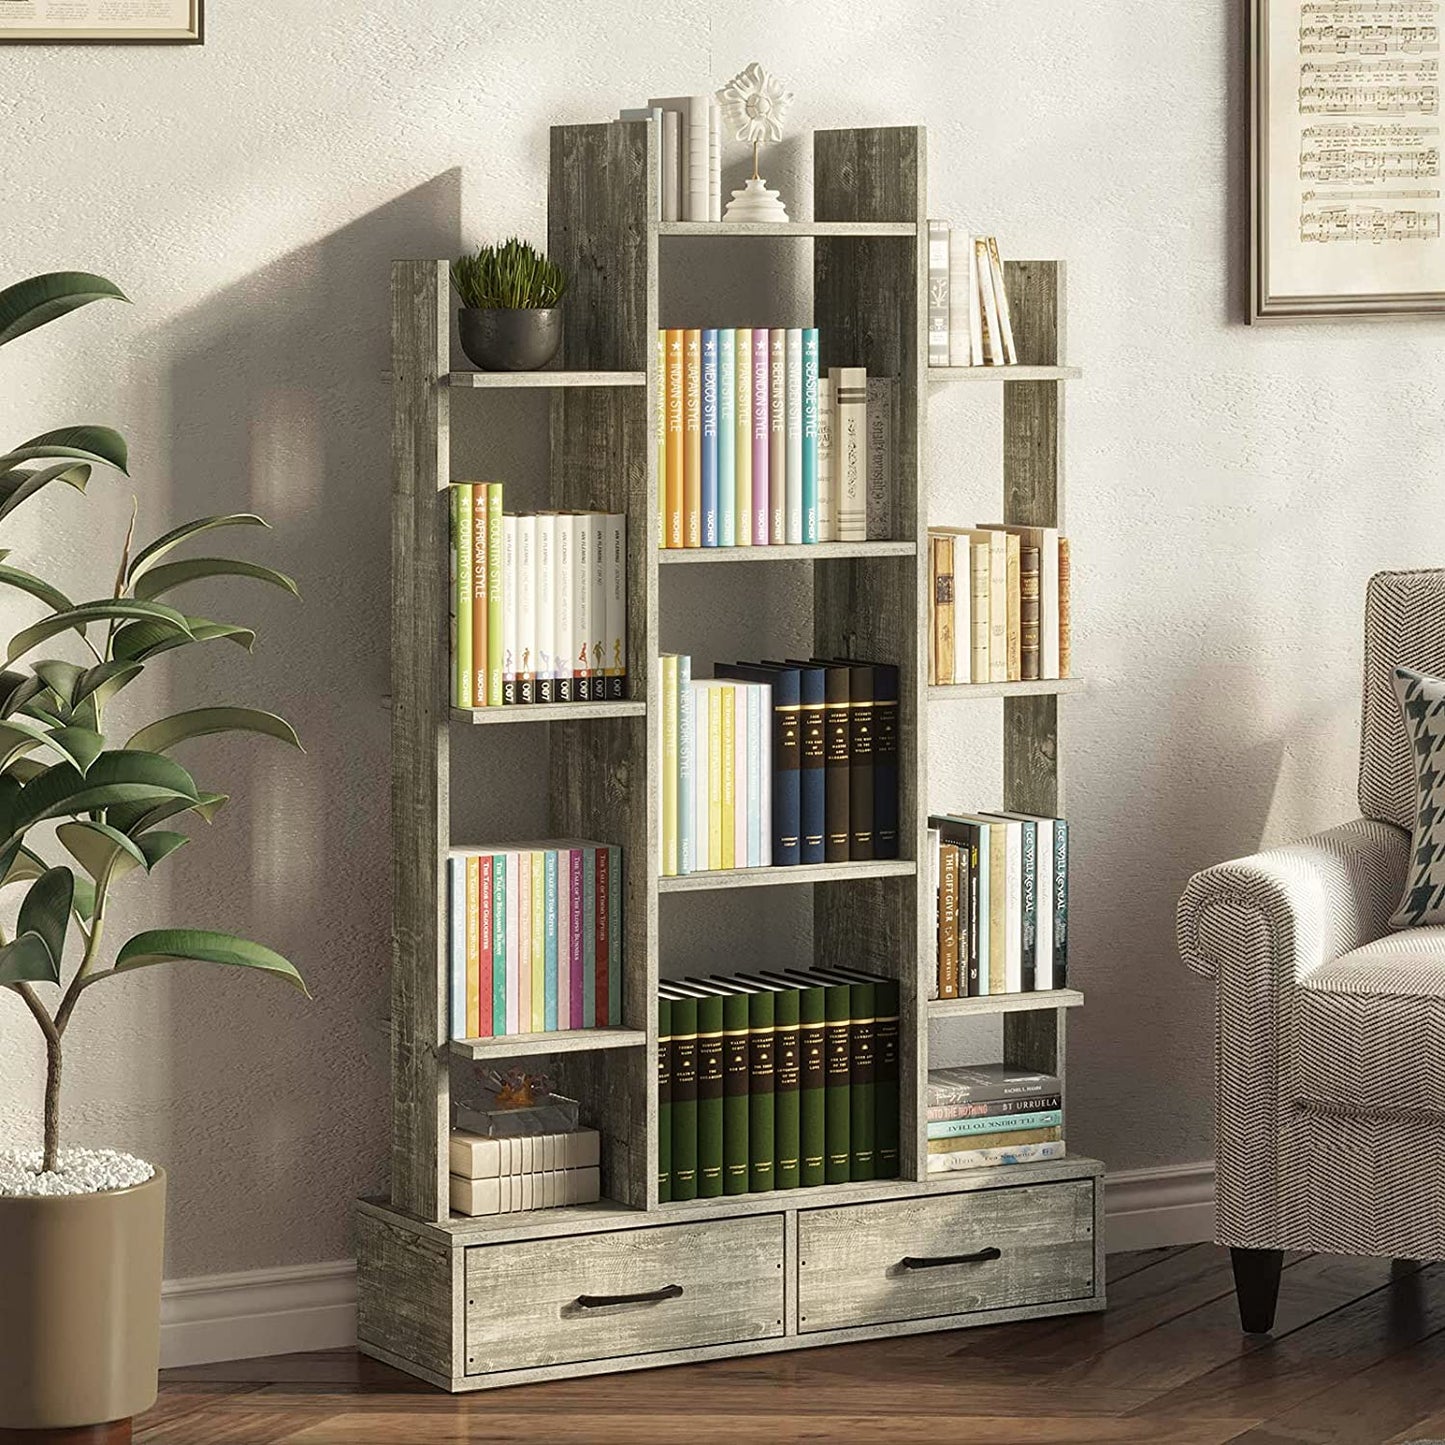 Bookshelf: Rustic Wood Bookshelves with 2 Wooden Drawers